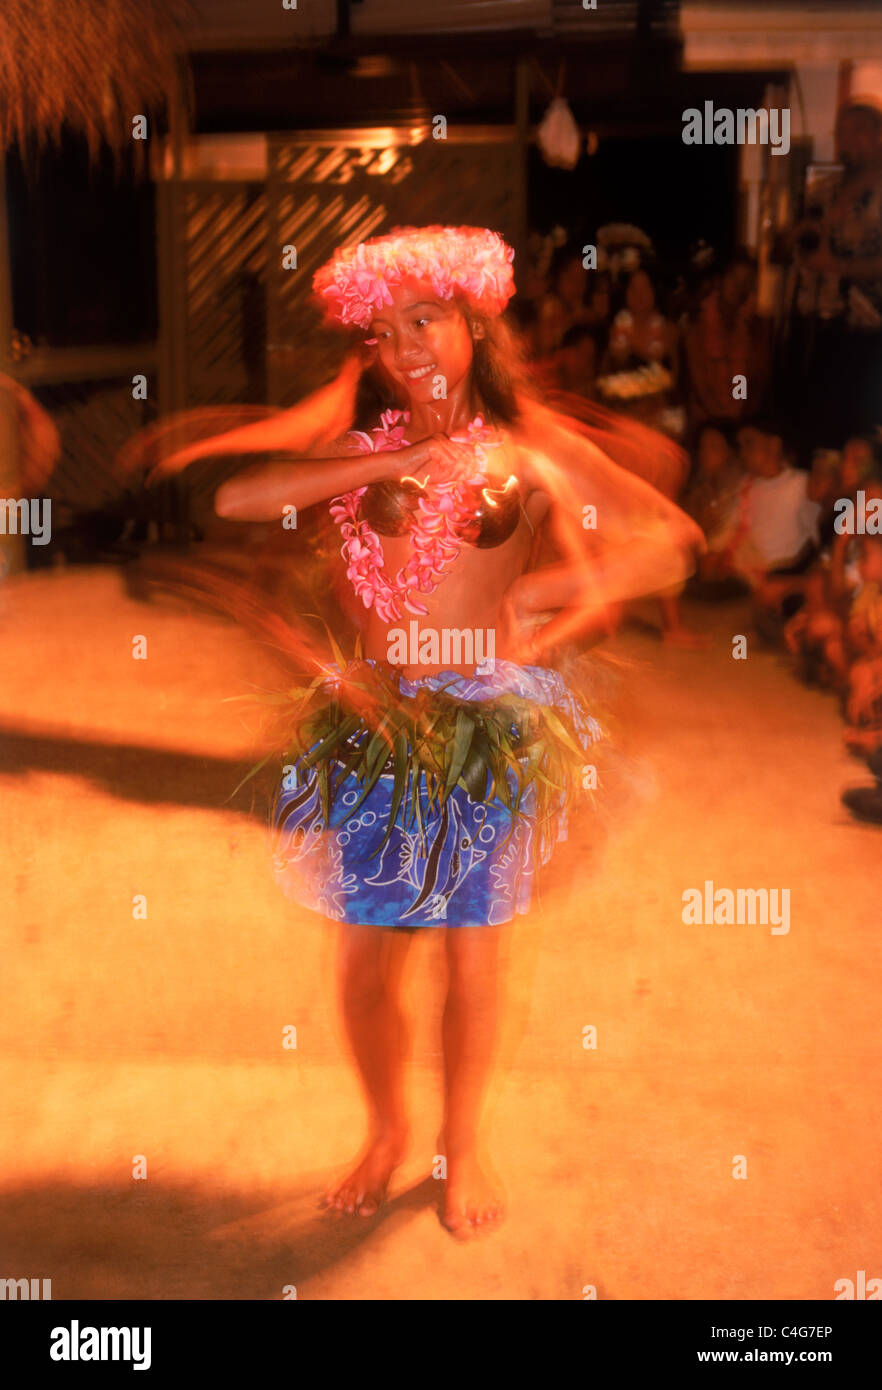 Polynesia Tahiti Girl Fotos Und Bildmaterial In Hoher Auflösung Seite 2 Alamy 